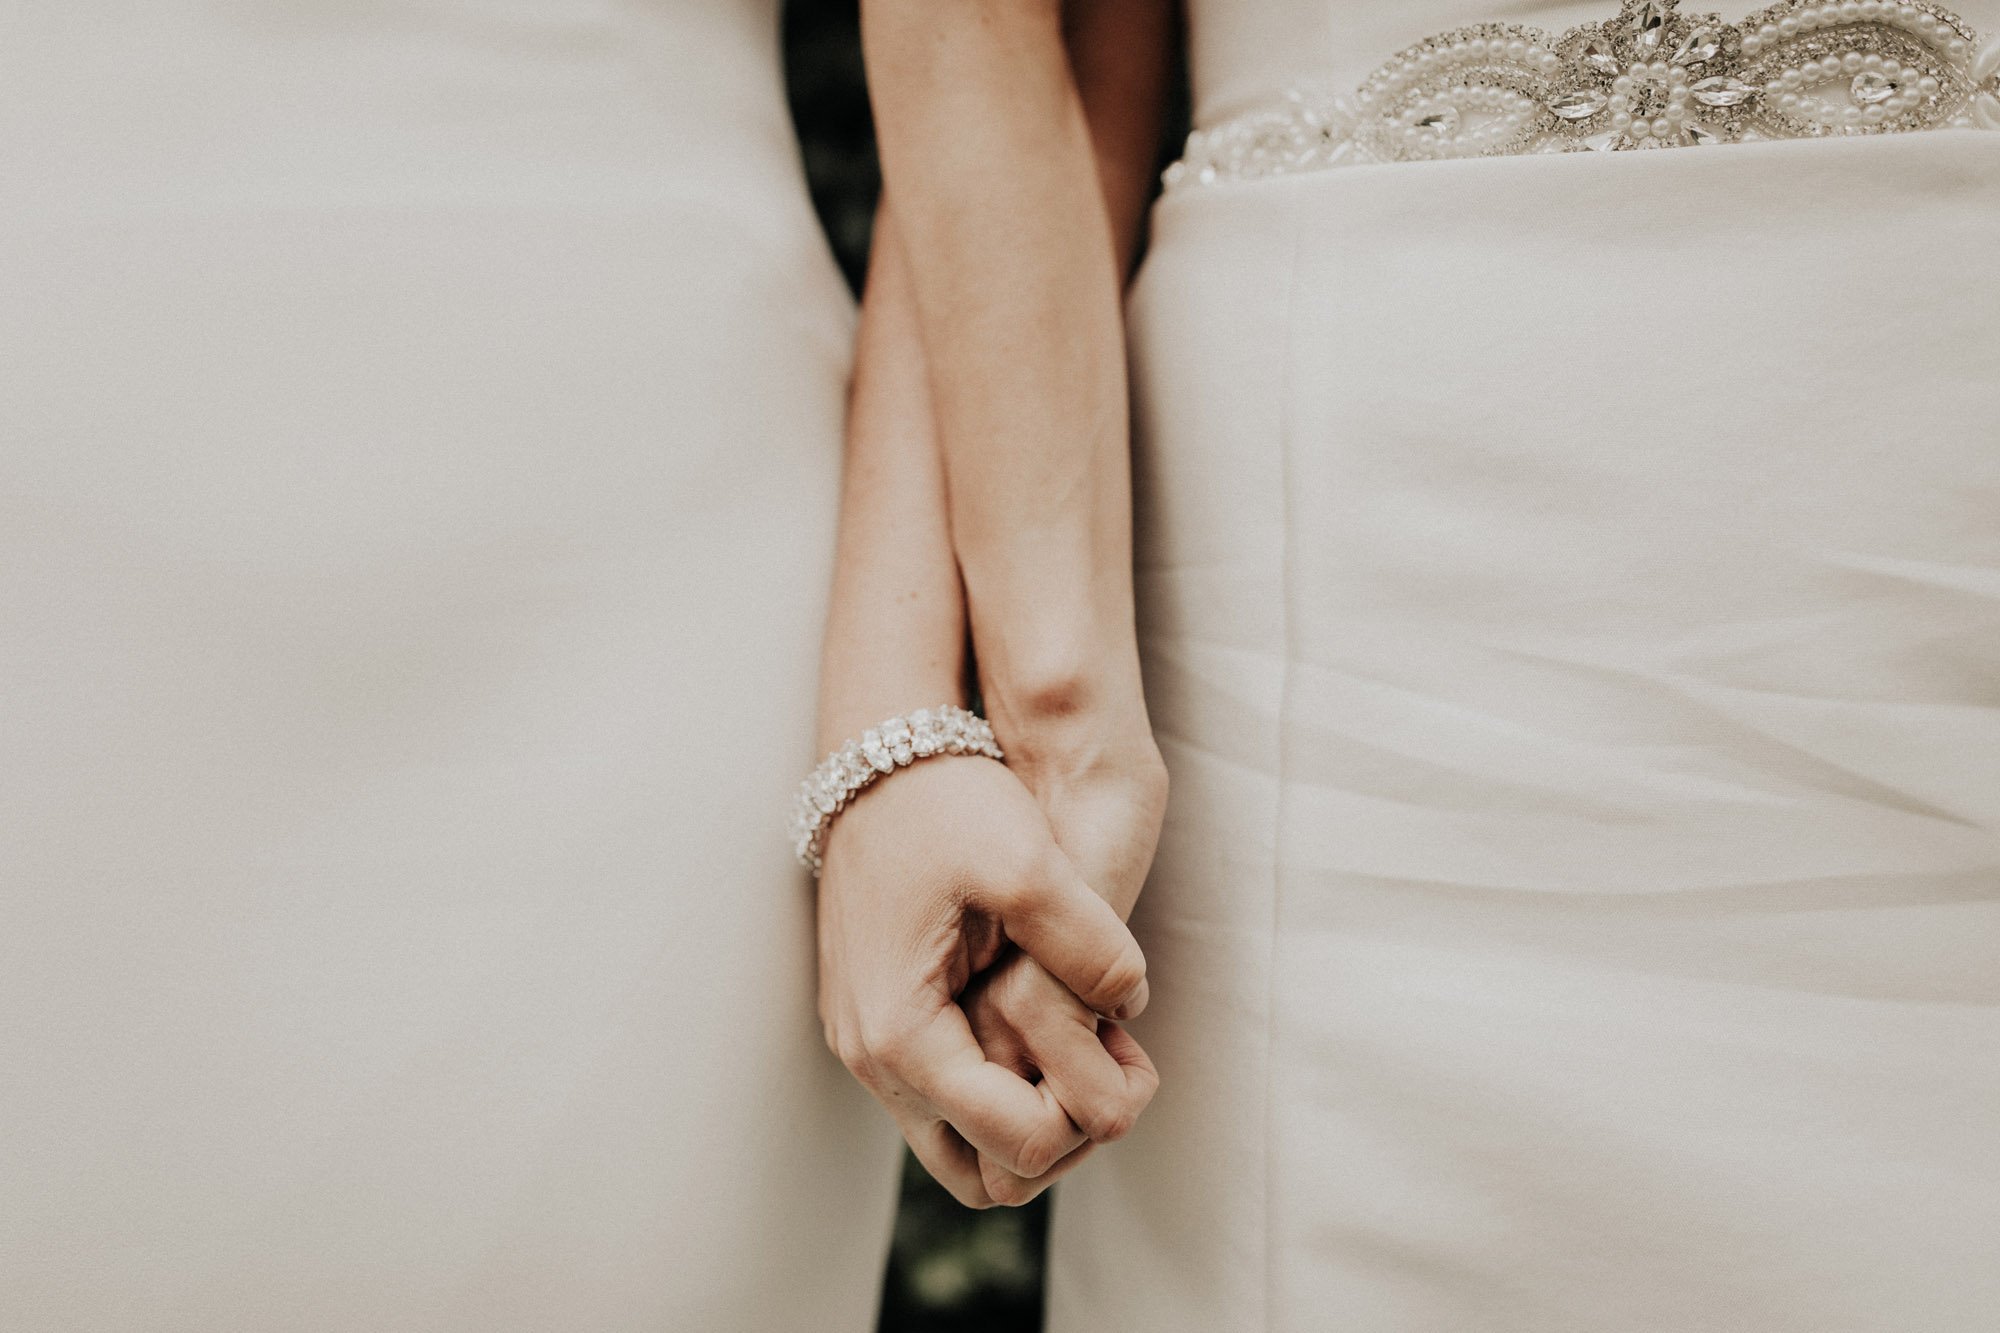 kylewillisphoto-union-trust-philadelphia-lgbt-lgbtq-wedding-gay-same-sex-35mm-pa-nj-ct-nyc-photographer